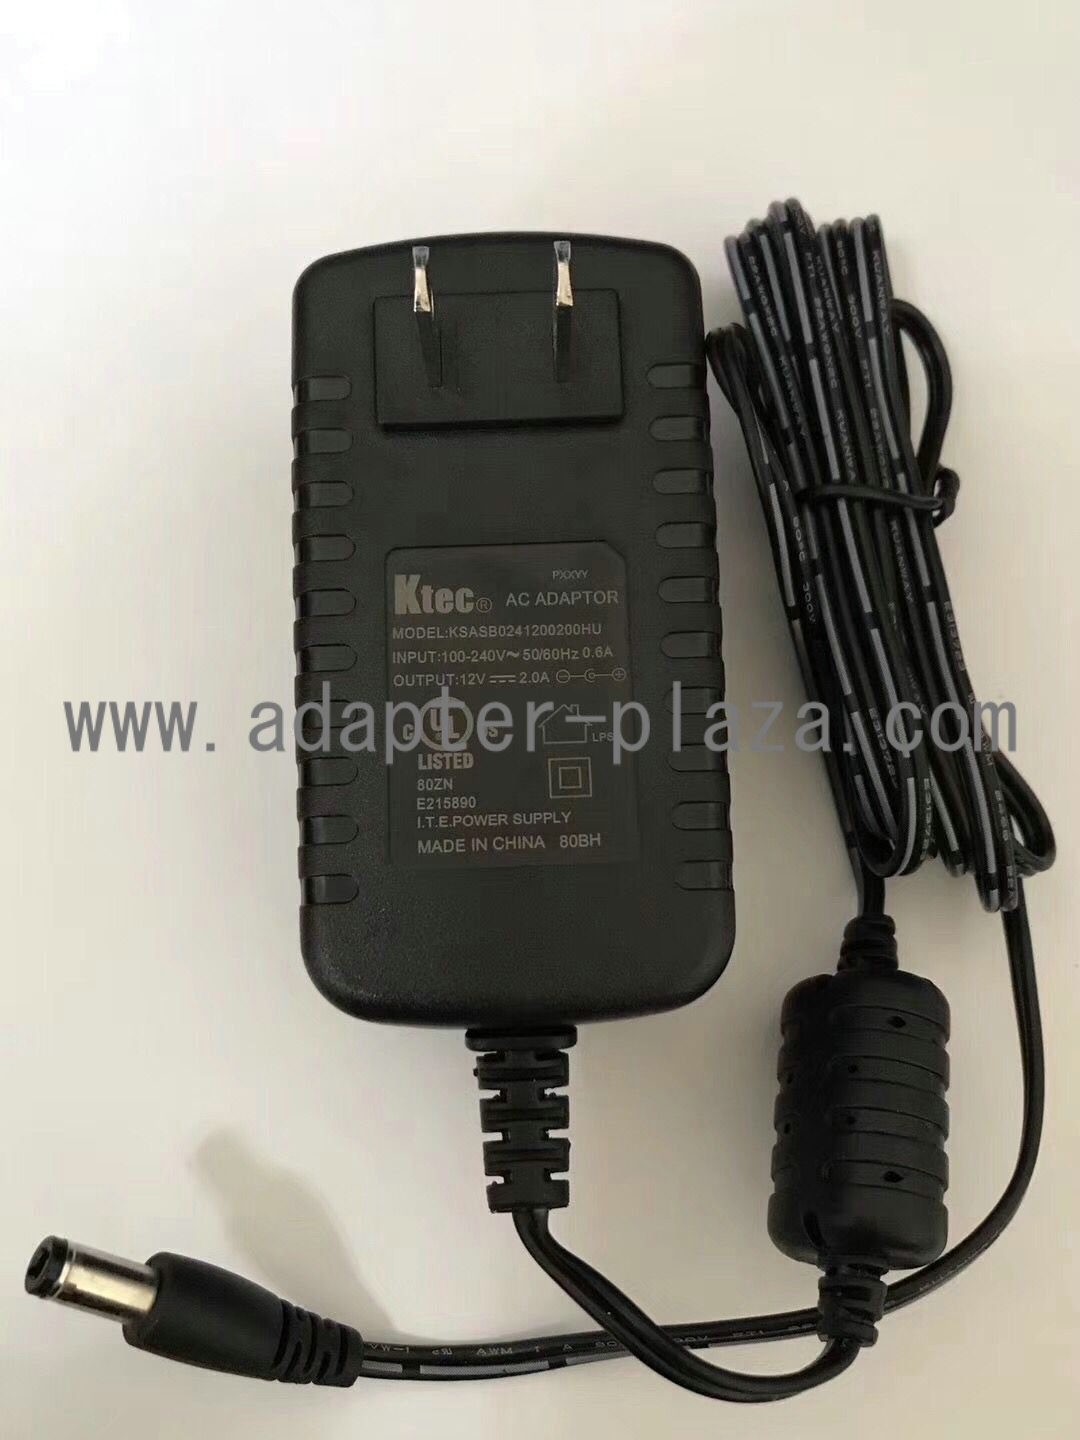 *Brand NEW* Ktec KSASB0241200200HU 12V 2.0A AC DC Adapter POWER SUPPLY - Click Image to Close